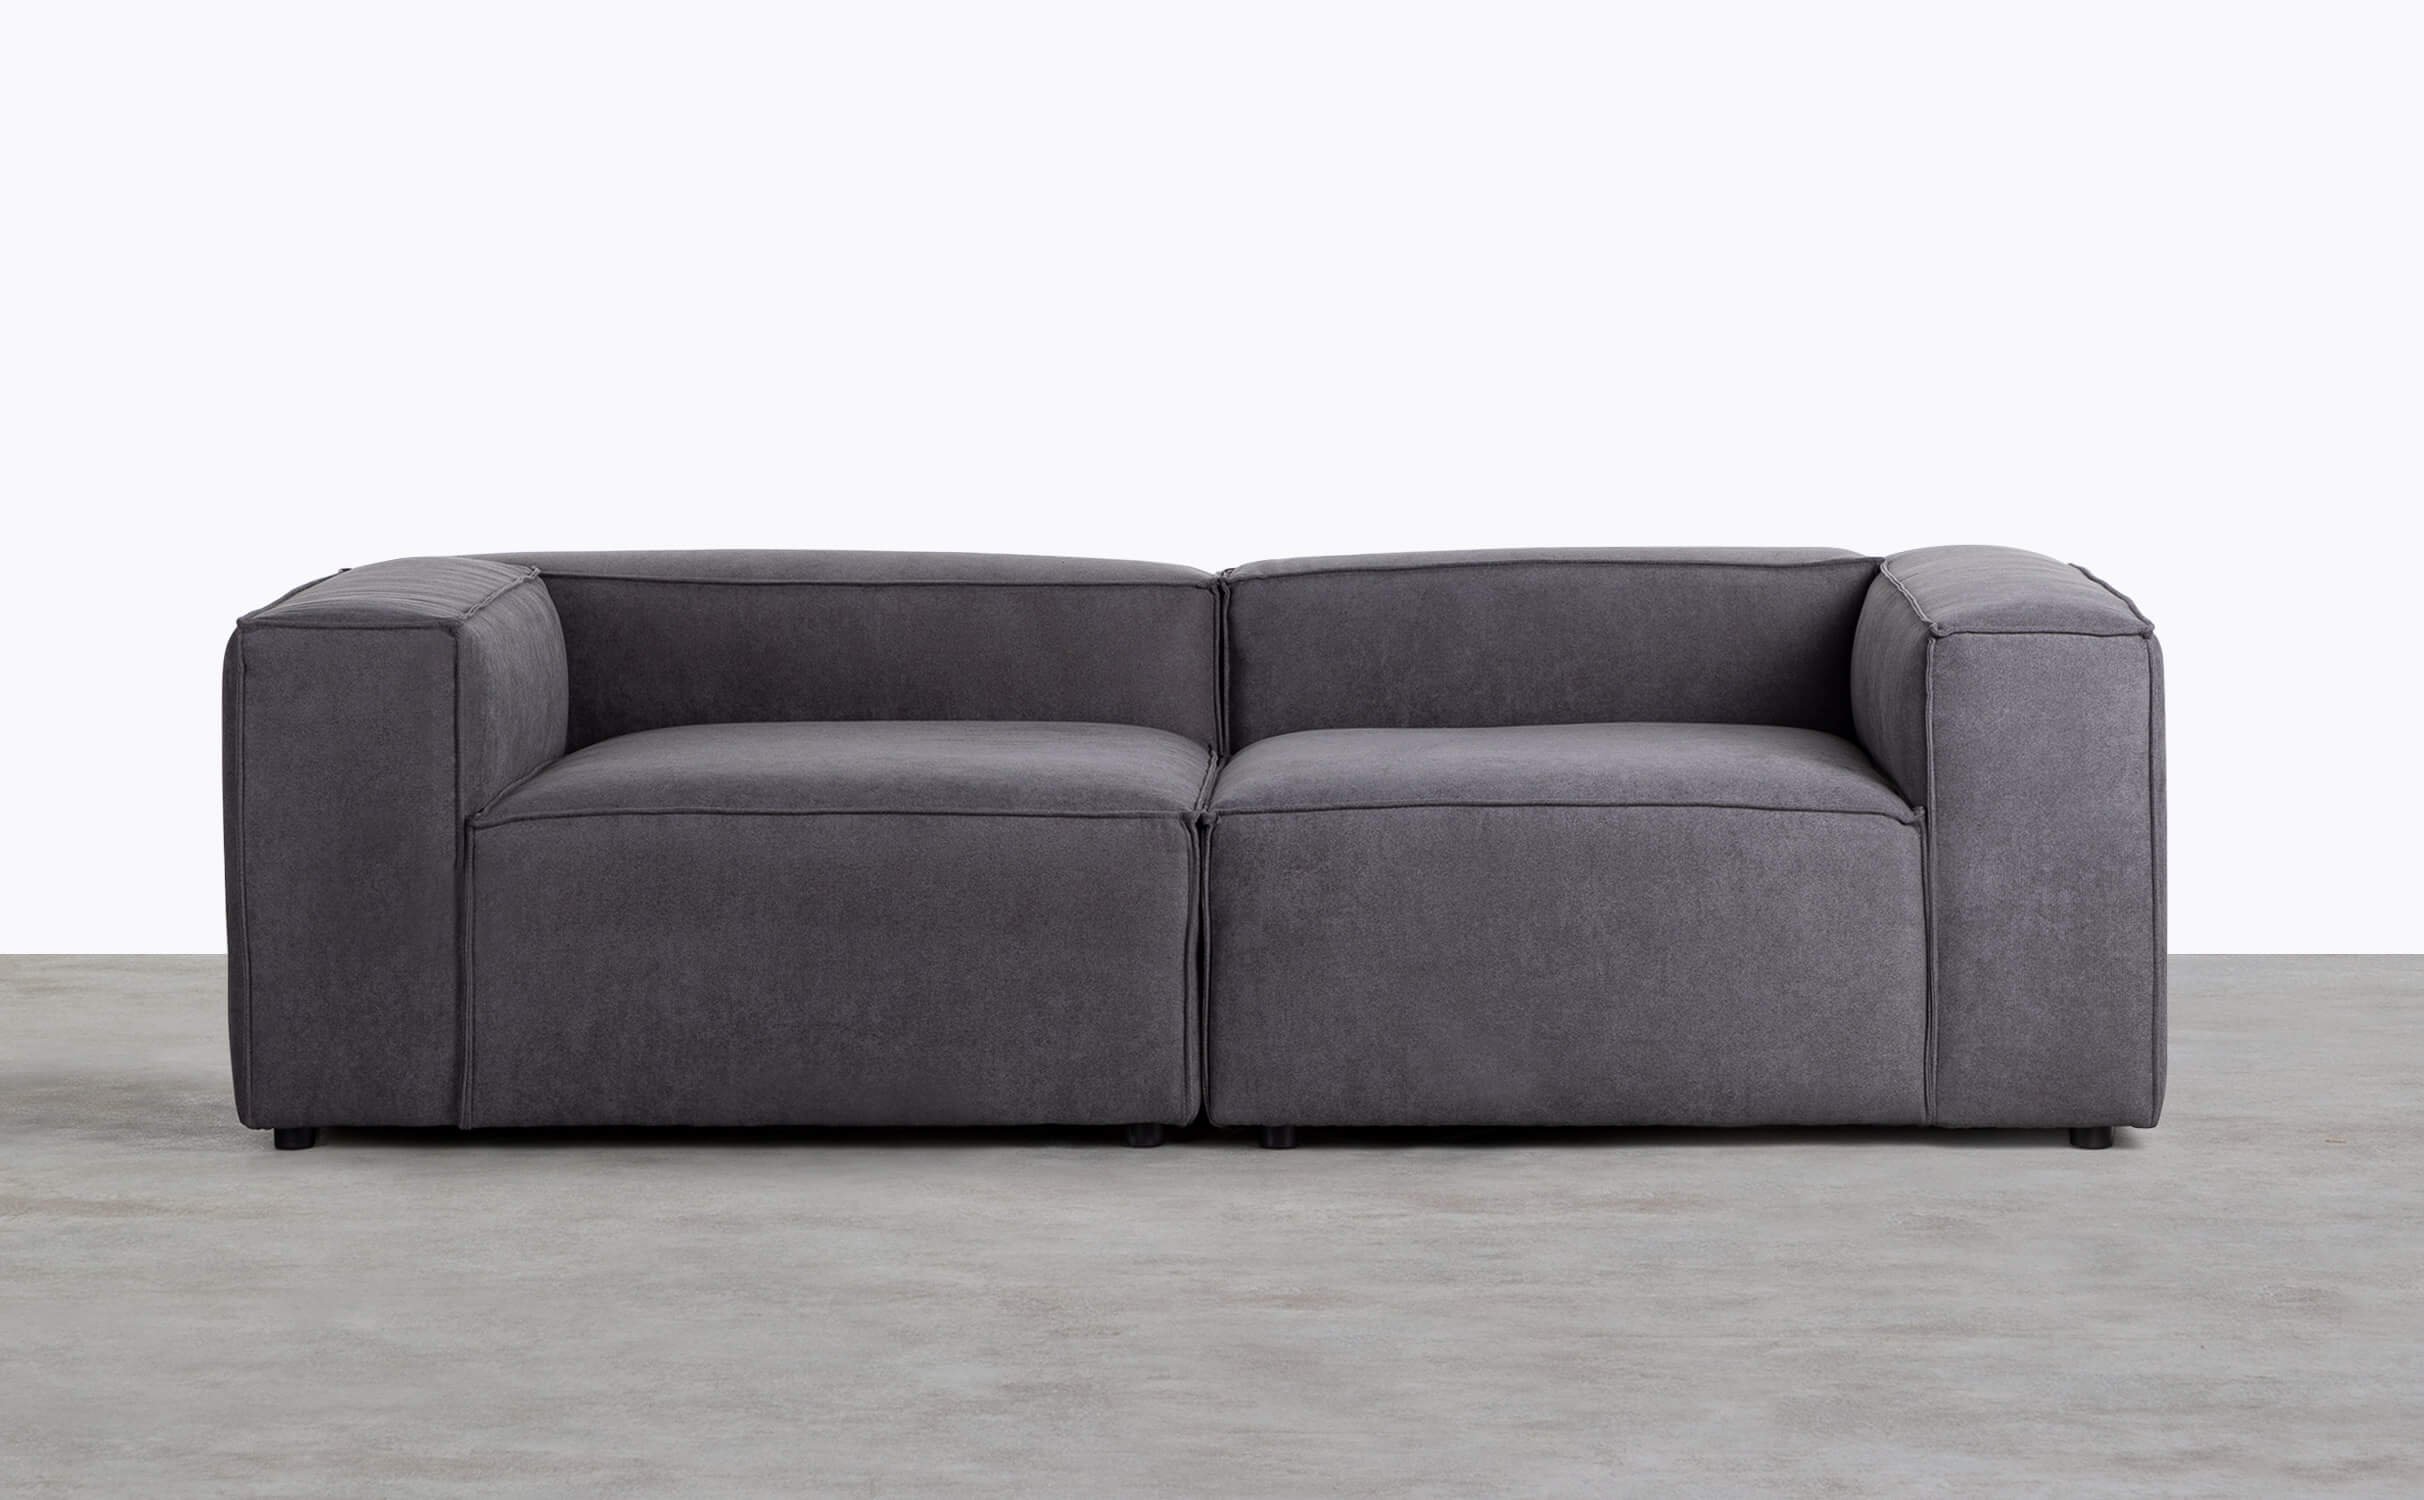 Jordan XL Modulares 2-teiliges Eck-Sofa aus Stoff, Galeriebild 1